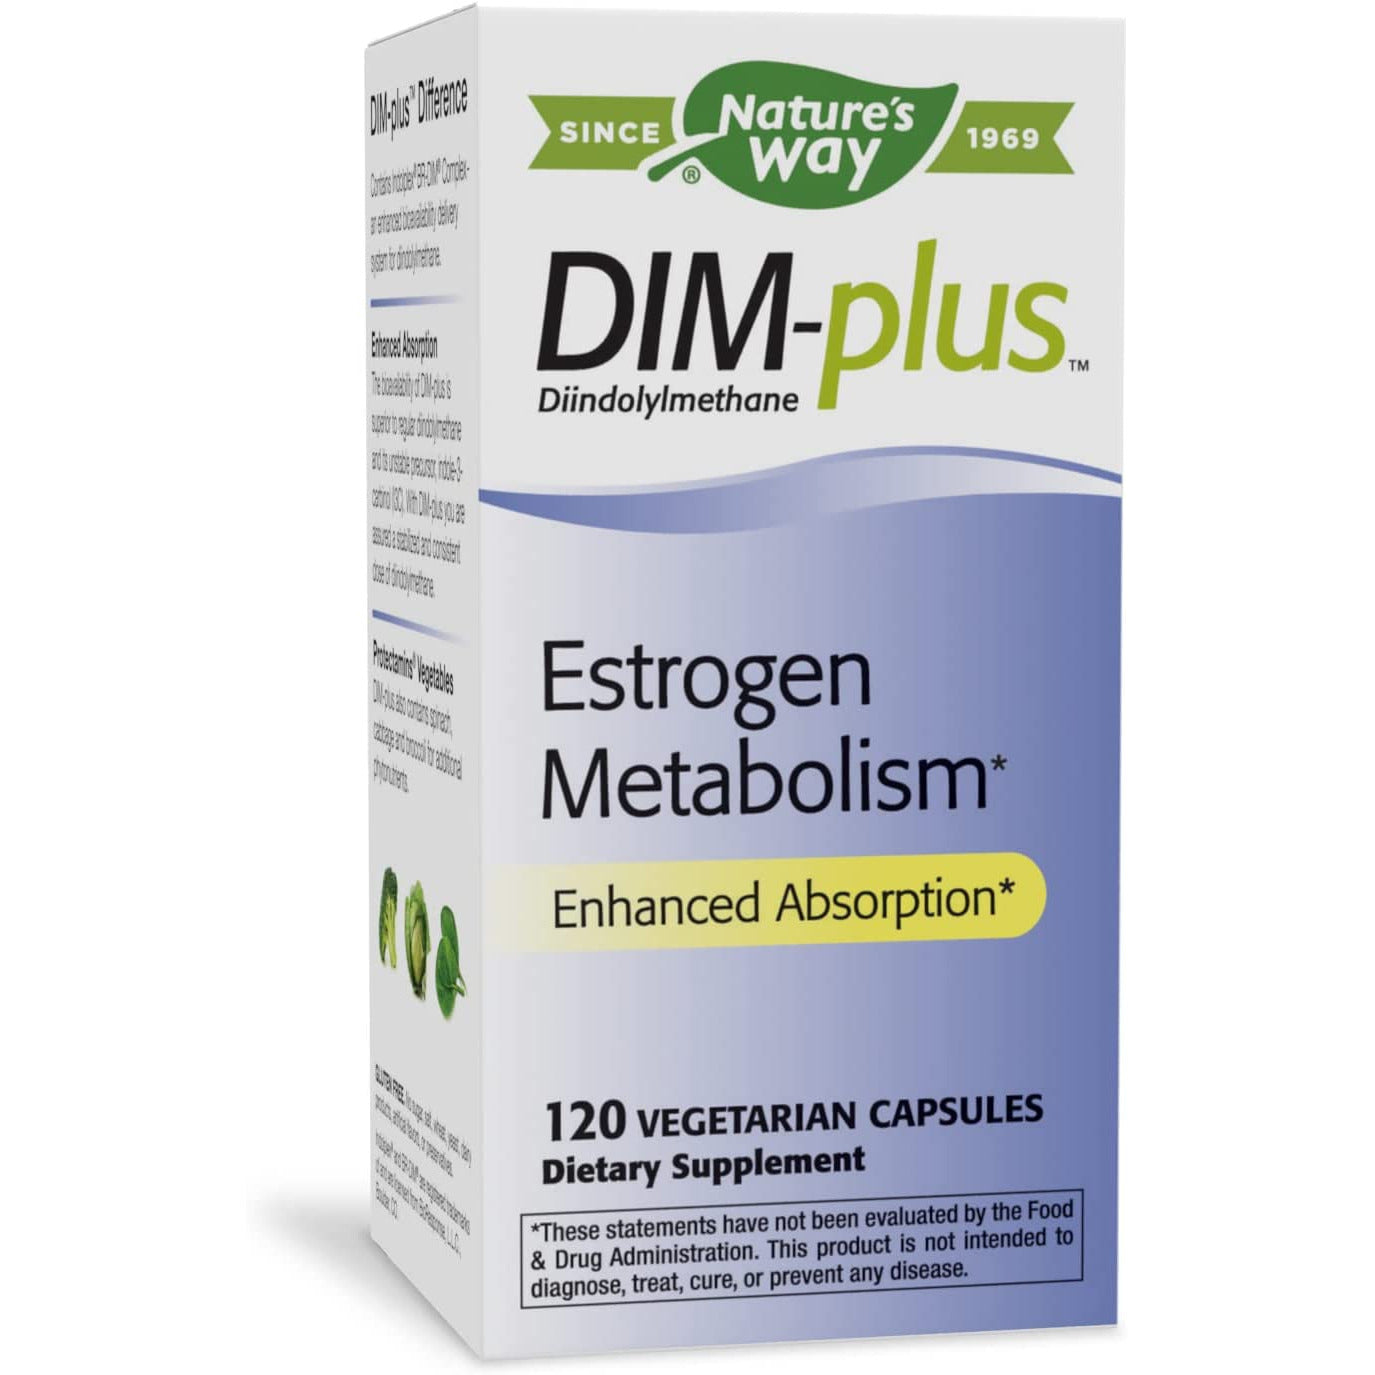 Nature's Way DIM-Plus Estrogen Metabolism